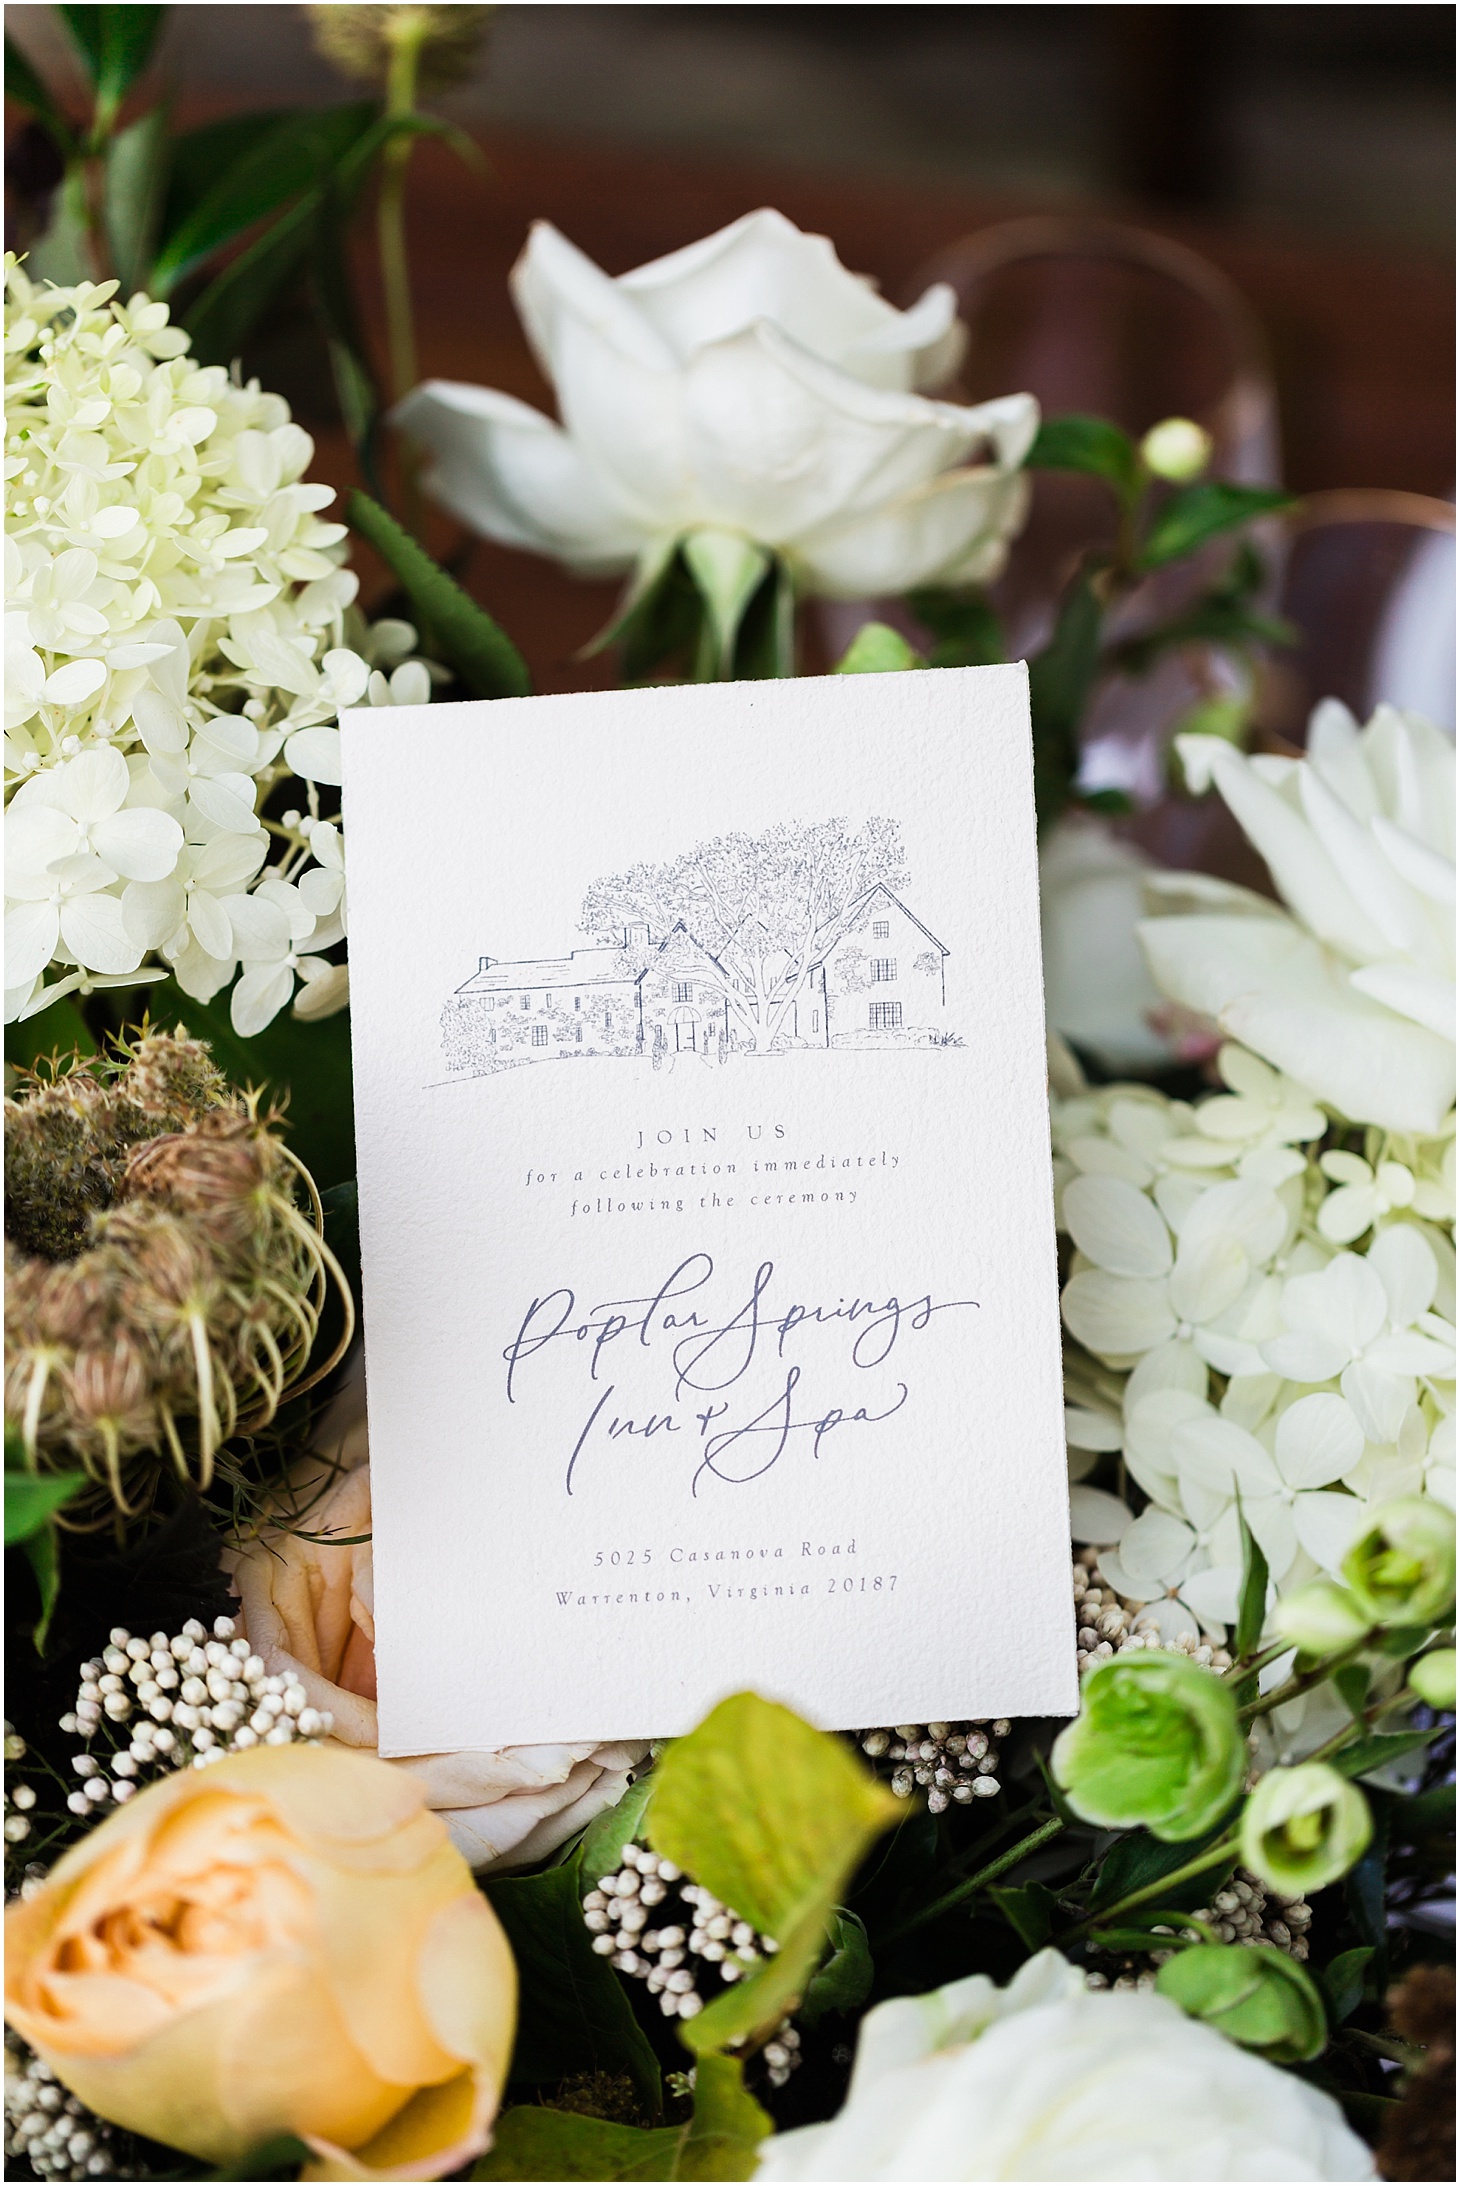 Wild Green Yonder Wedding Flowers and Stephanie B. Designs Invitation Detail | Equestrian-Inspired Fall Wedding Editorial at Poplar Springs Manor | Sarah Bradshaw Photography